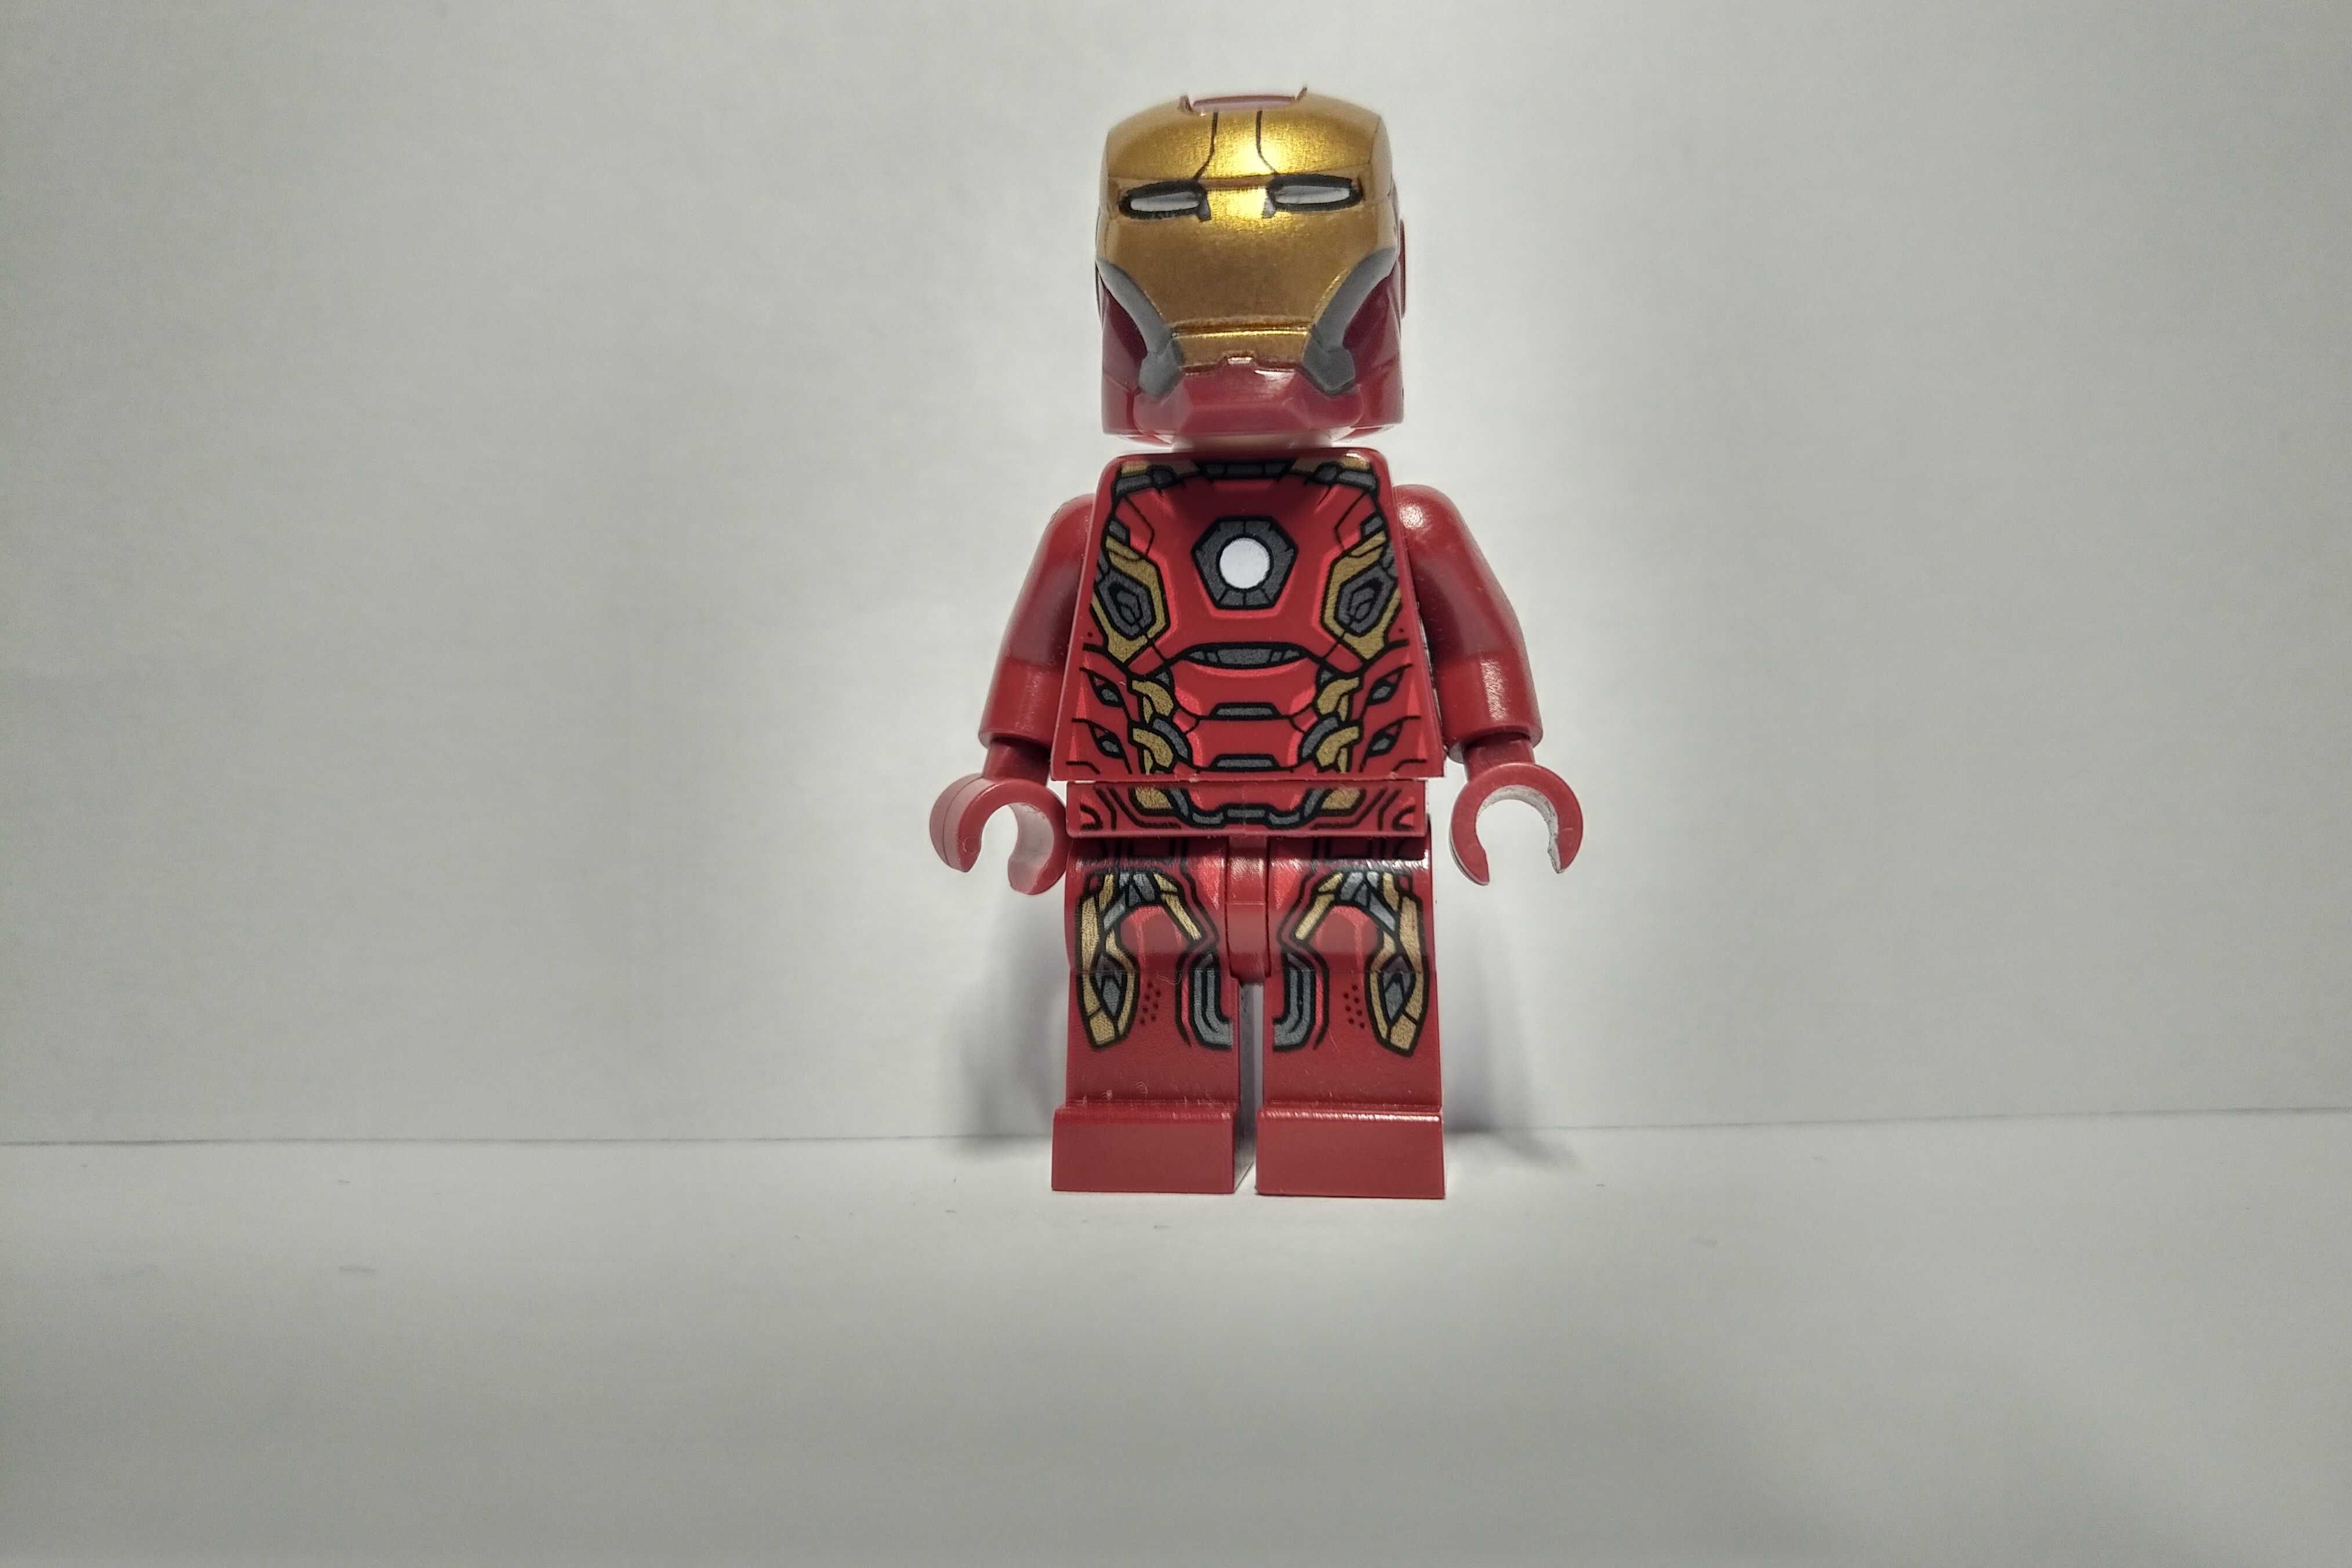 Lego Marvel figurka sh164 Iron Man - Mark 45 Armor